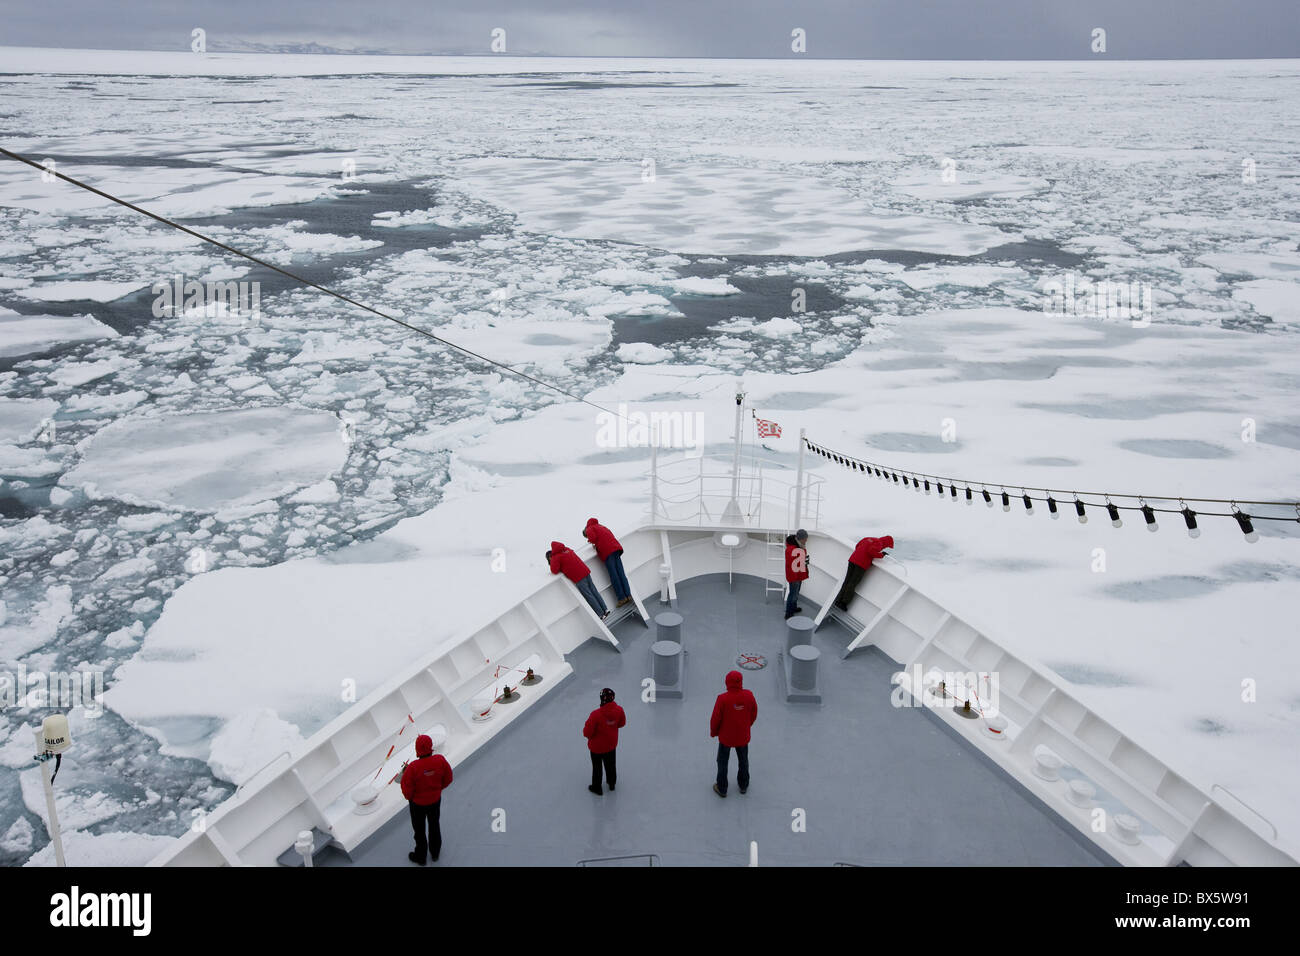 Ship breaking through ice floe and drift ice, Greenland, Arctic, Polar Regions Stock Photo